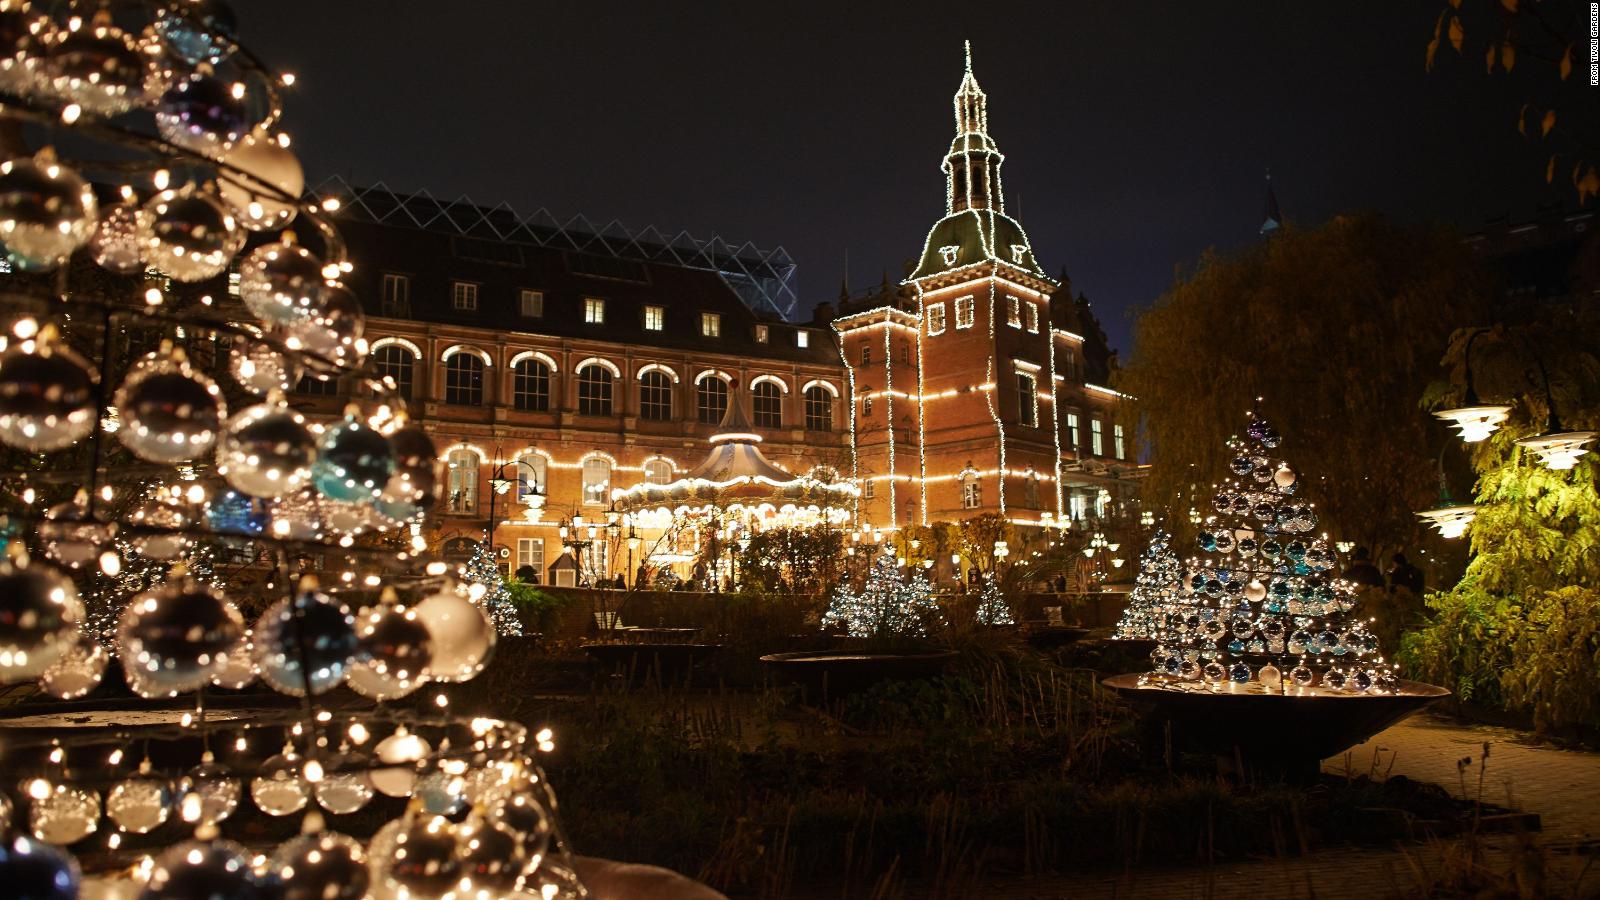 Christmas lights around the world: 9 spectacular displays